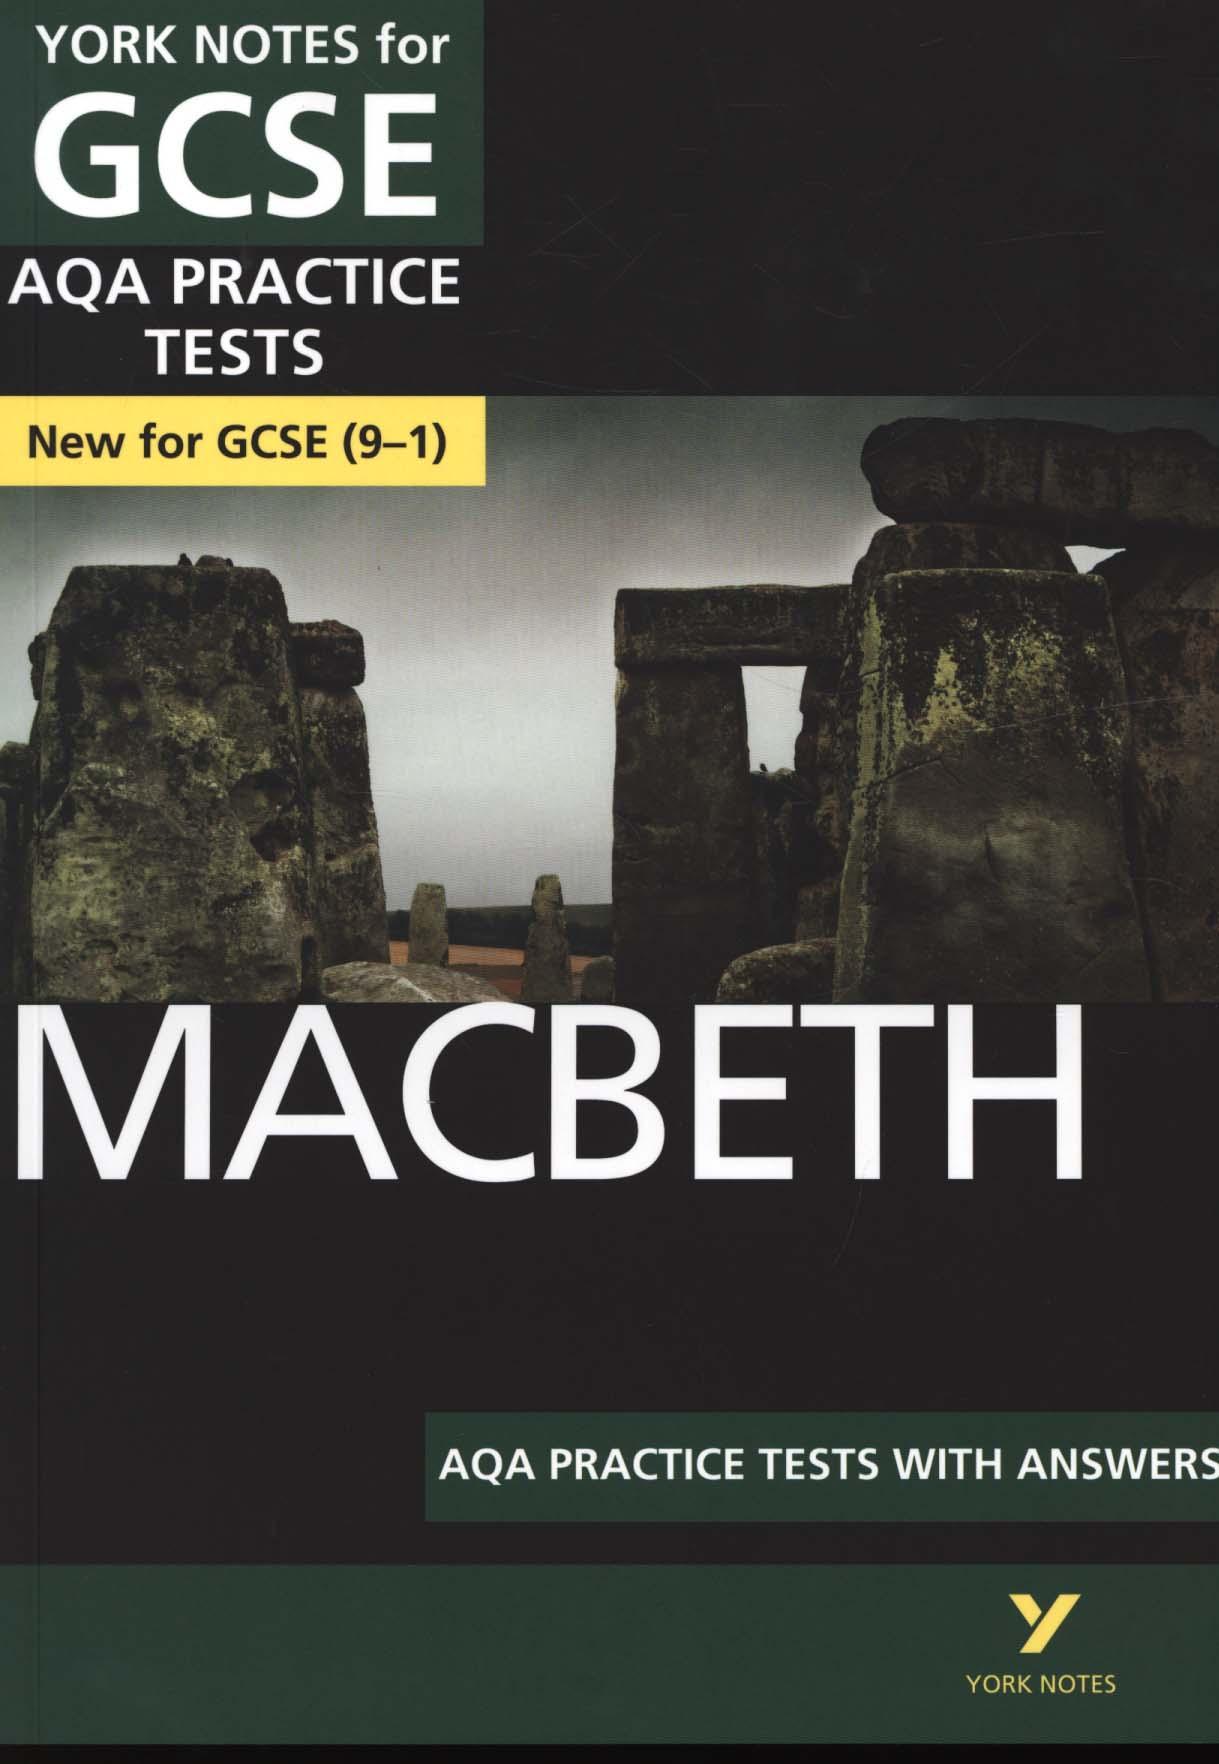 Macbeth AQA Practice Tests: York Notes for GCSE (9-1)